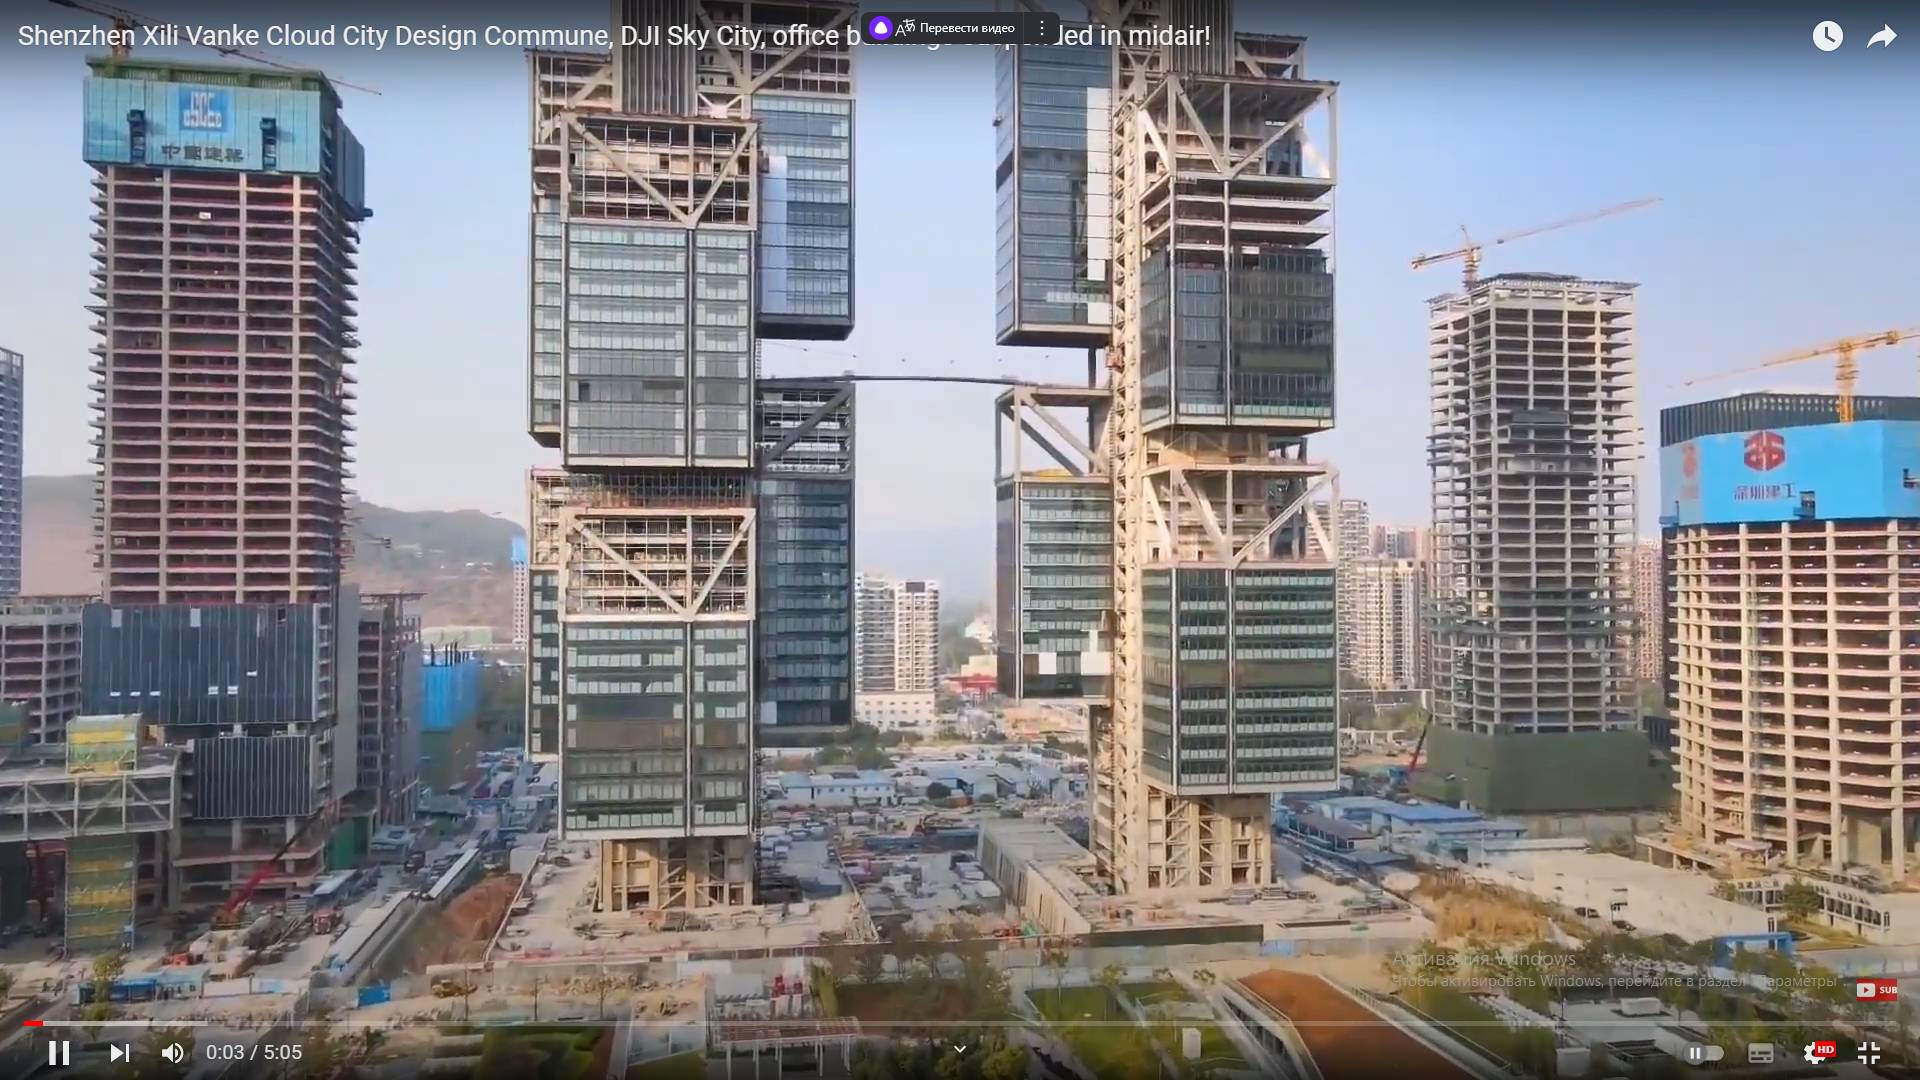 Цитата из видео «Shenzhen Xili Vanke Cloud City Design Commune, DJI Sky City, office buildings suspended in midair!». пользователя Aerial China, youtube.com